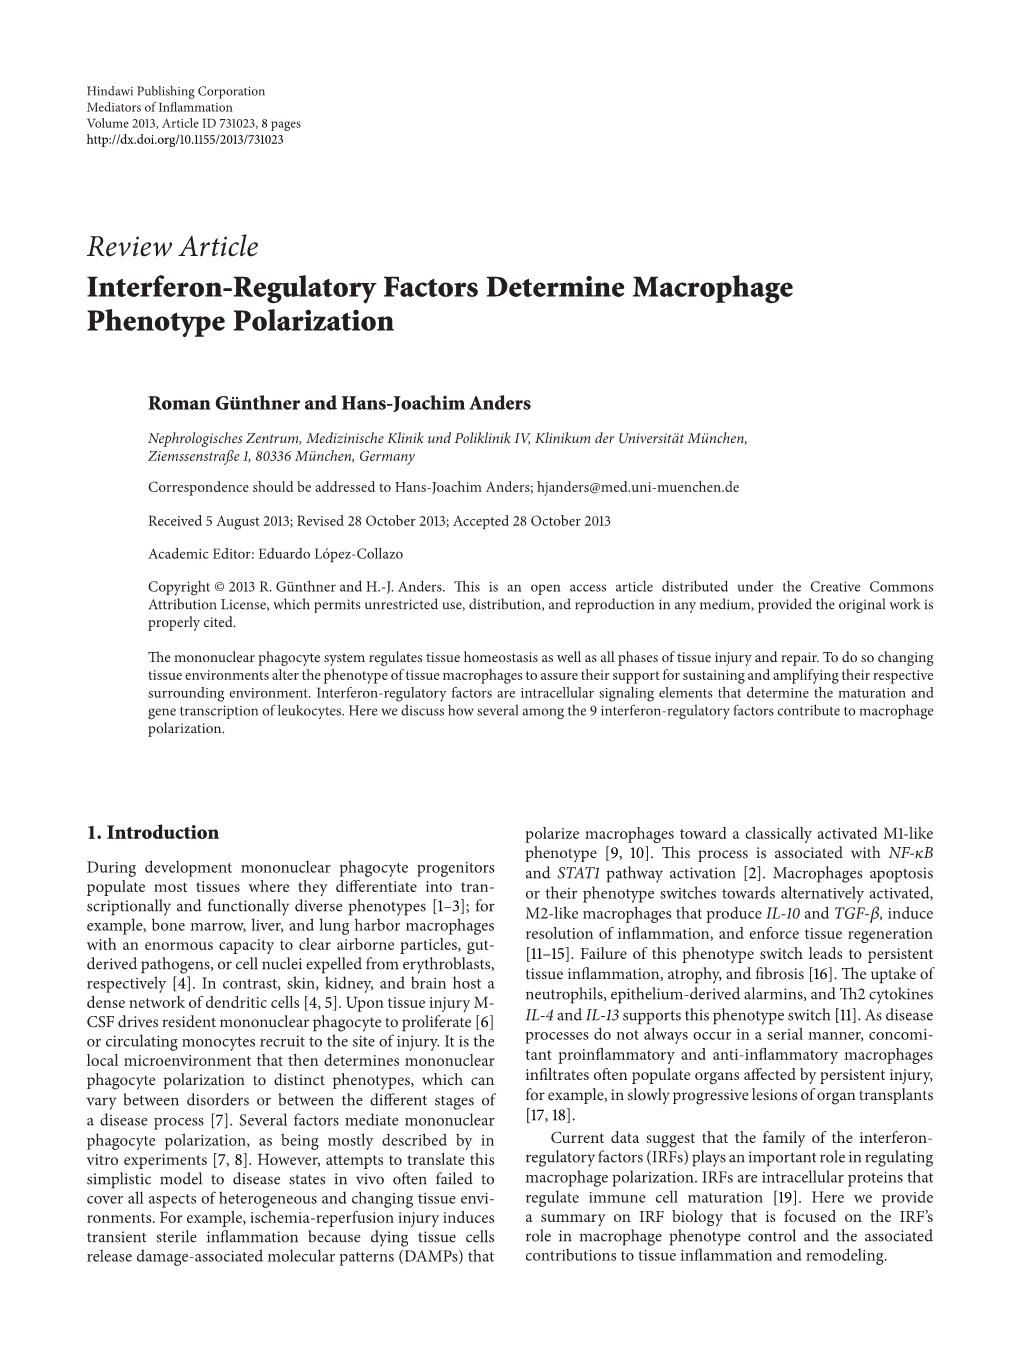 Interferon-Regulatory Factors Determine Macrophage Phenotype Polarization